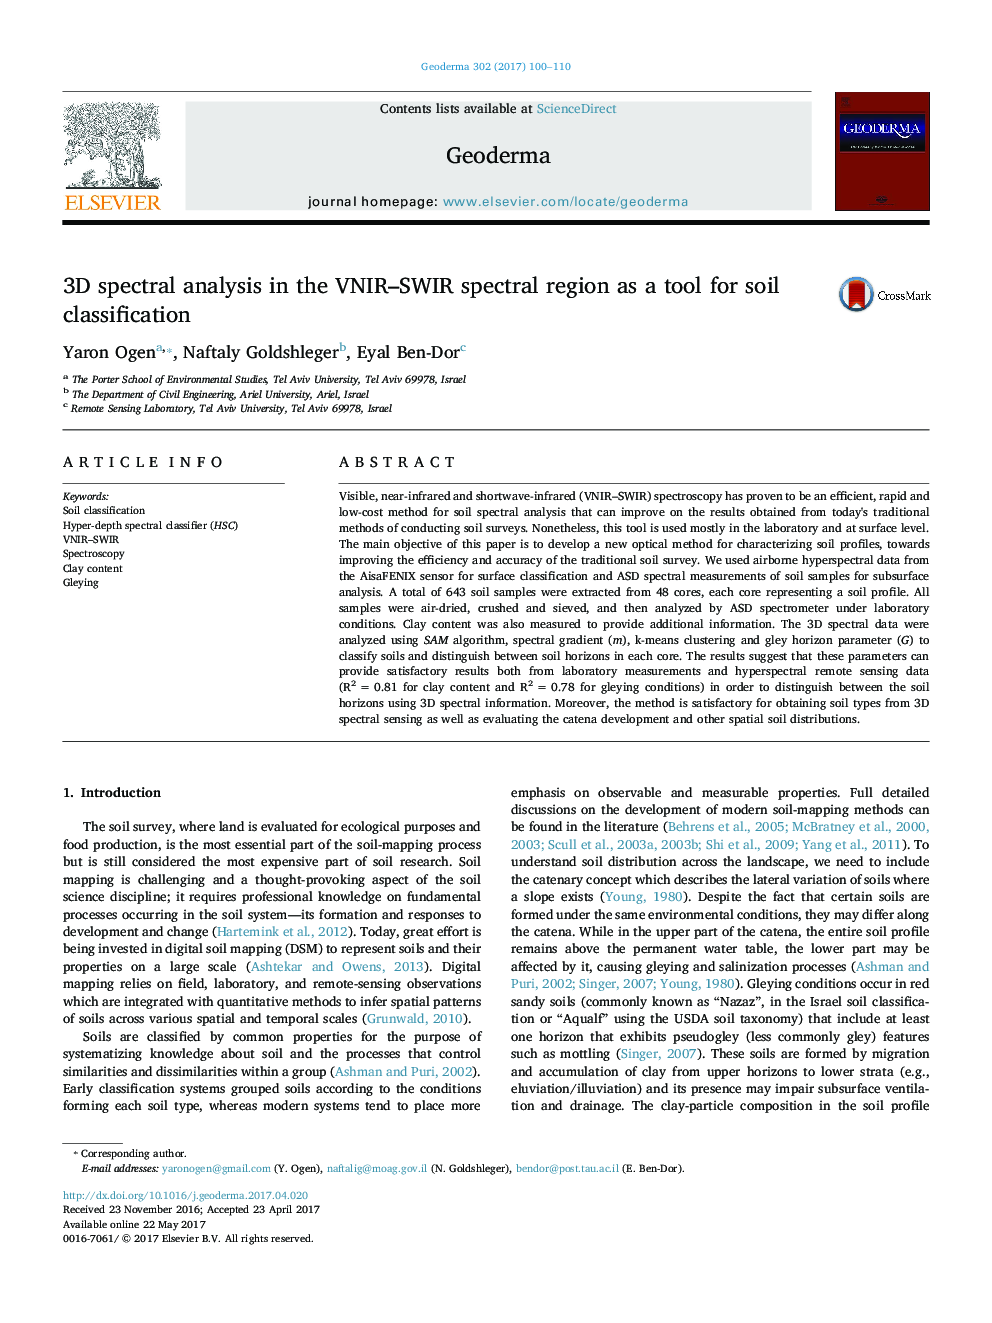 3D spectral analysis in the VNIR-SWIR spectral region as a tool for soil classification